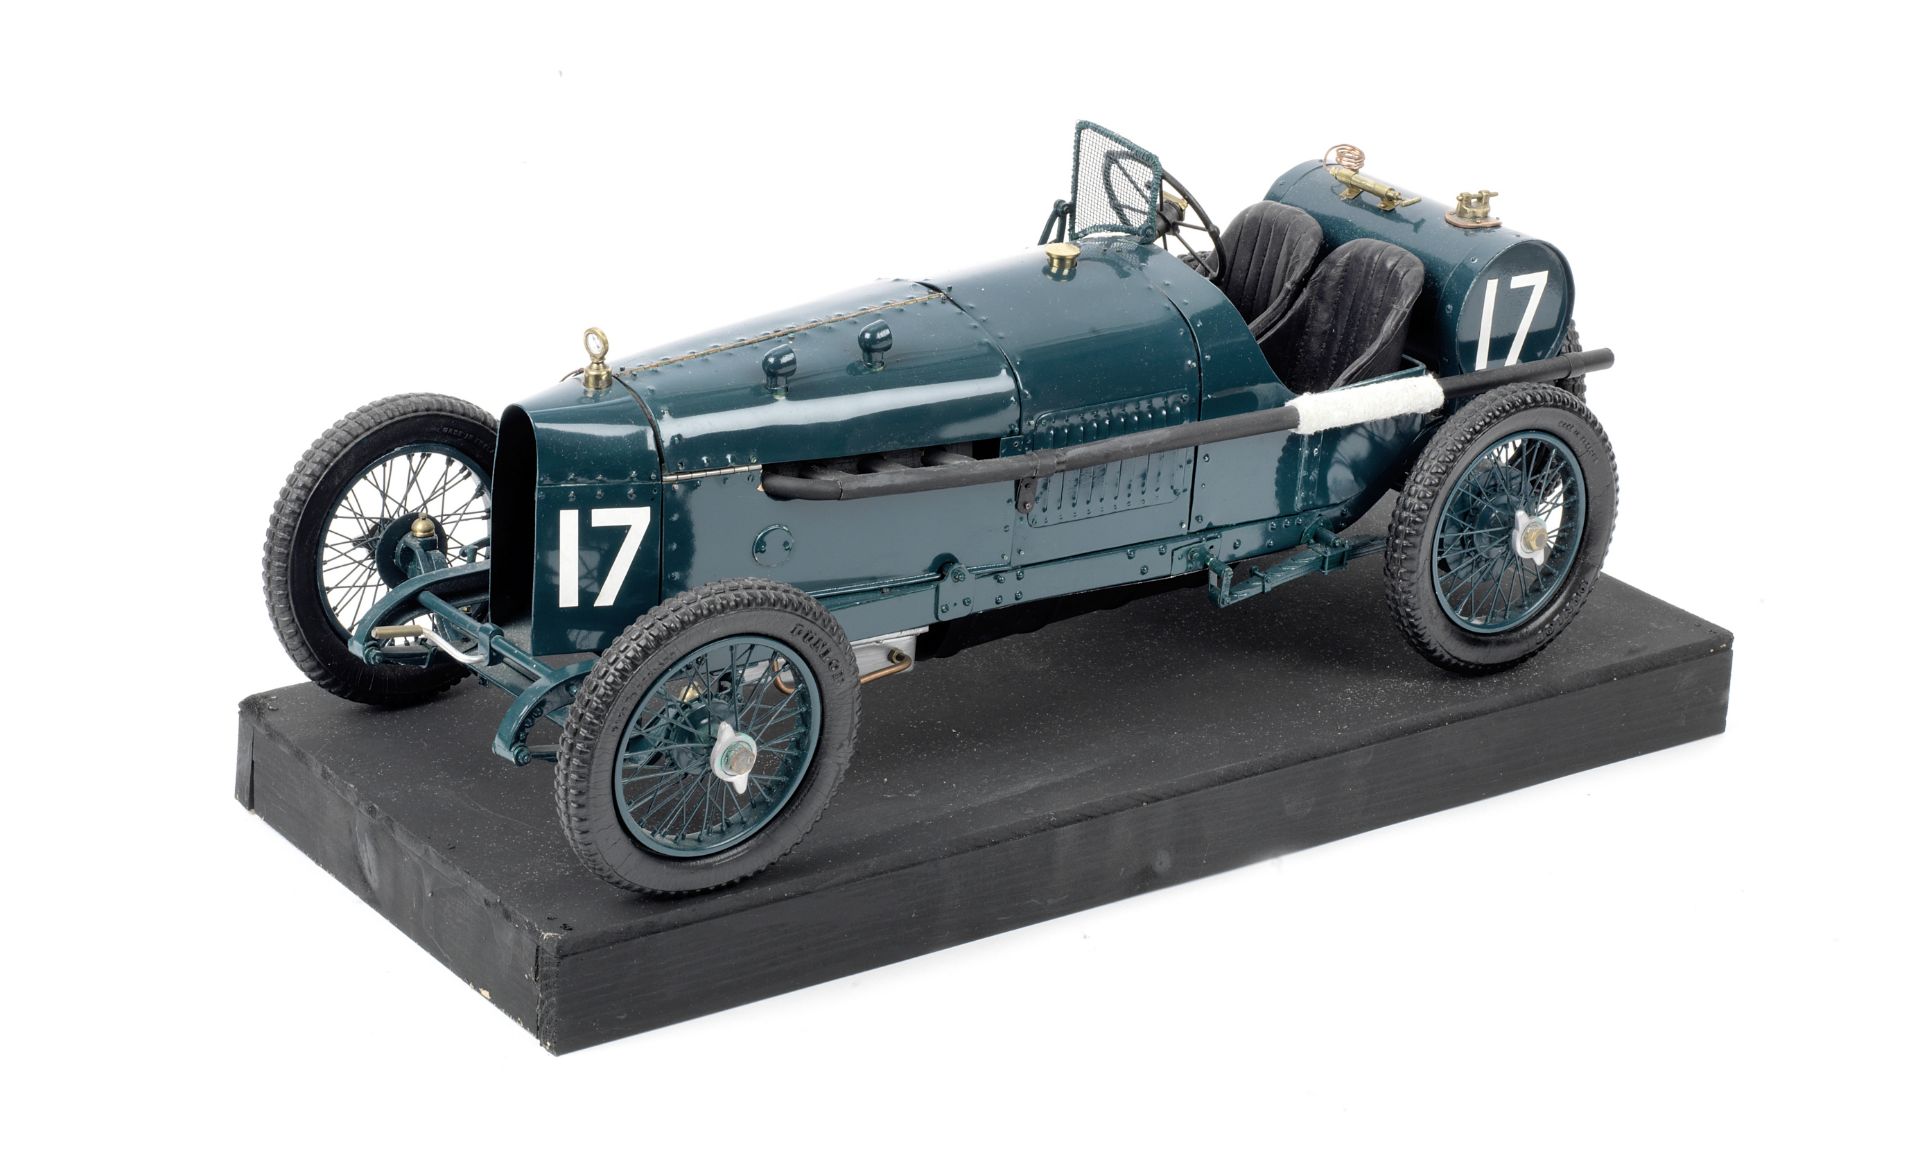 A 1:8 scale model of a 1914 RAC Tourist Trophy Grand Prix Vauxhall,